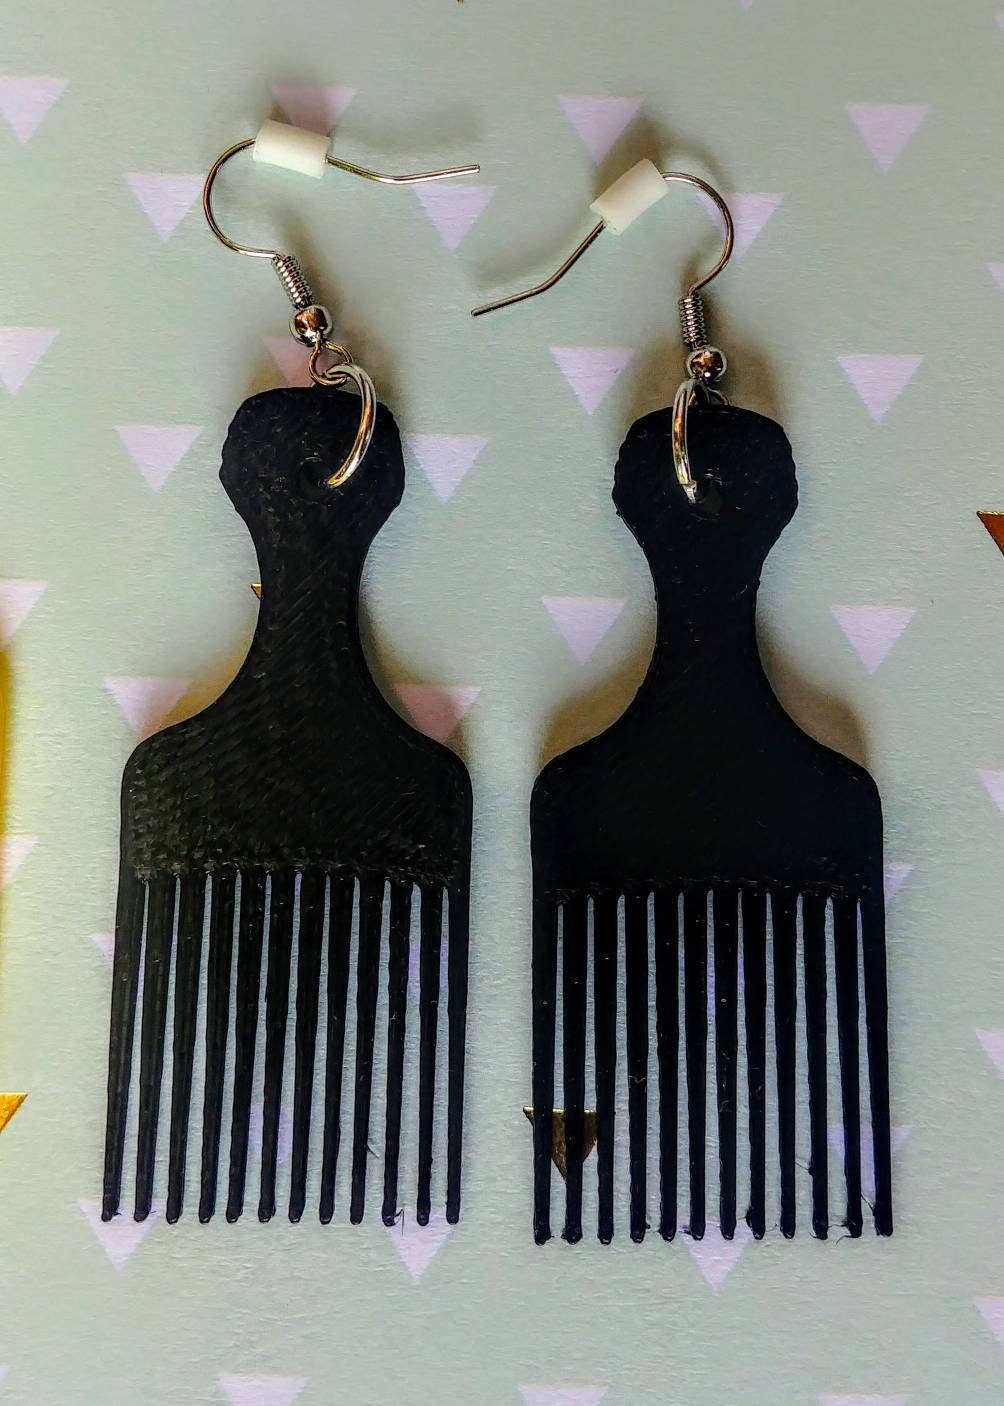 3D Printed Afro Printed Afro Pick Earrings